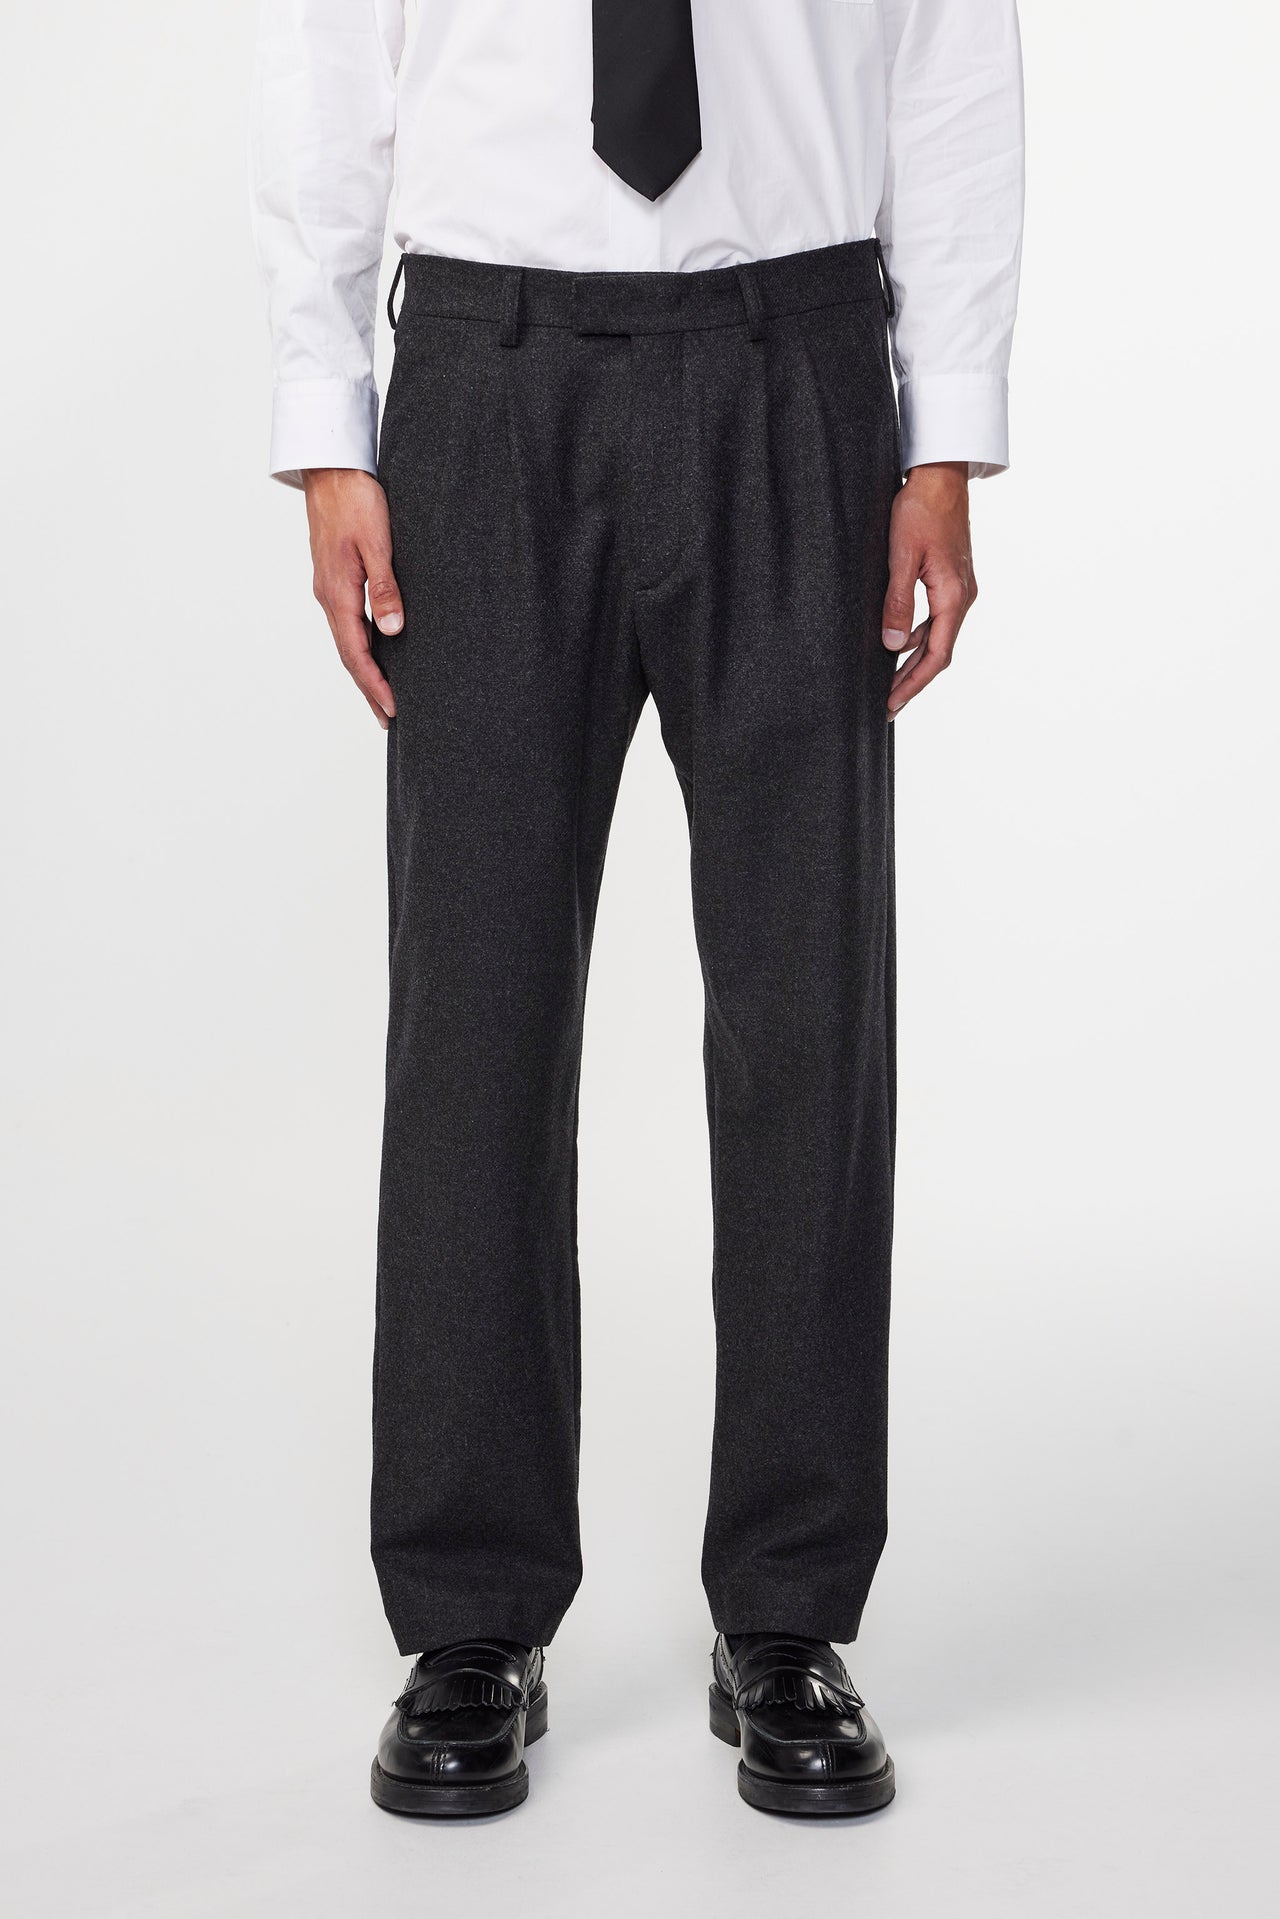 Reversible trousers from Sasha Ferrano Sp-260